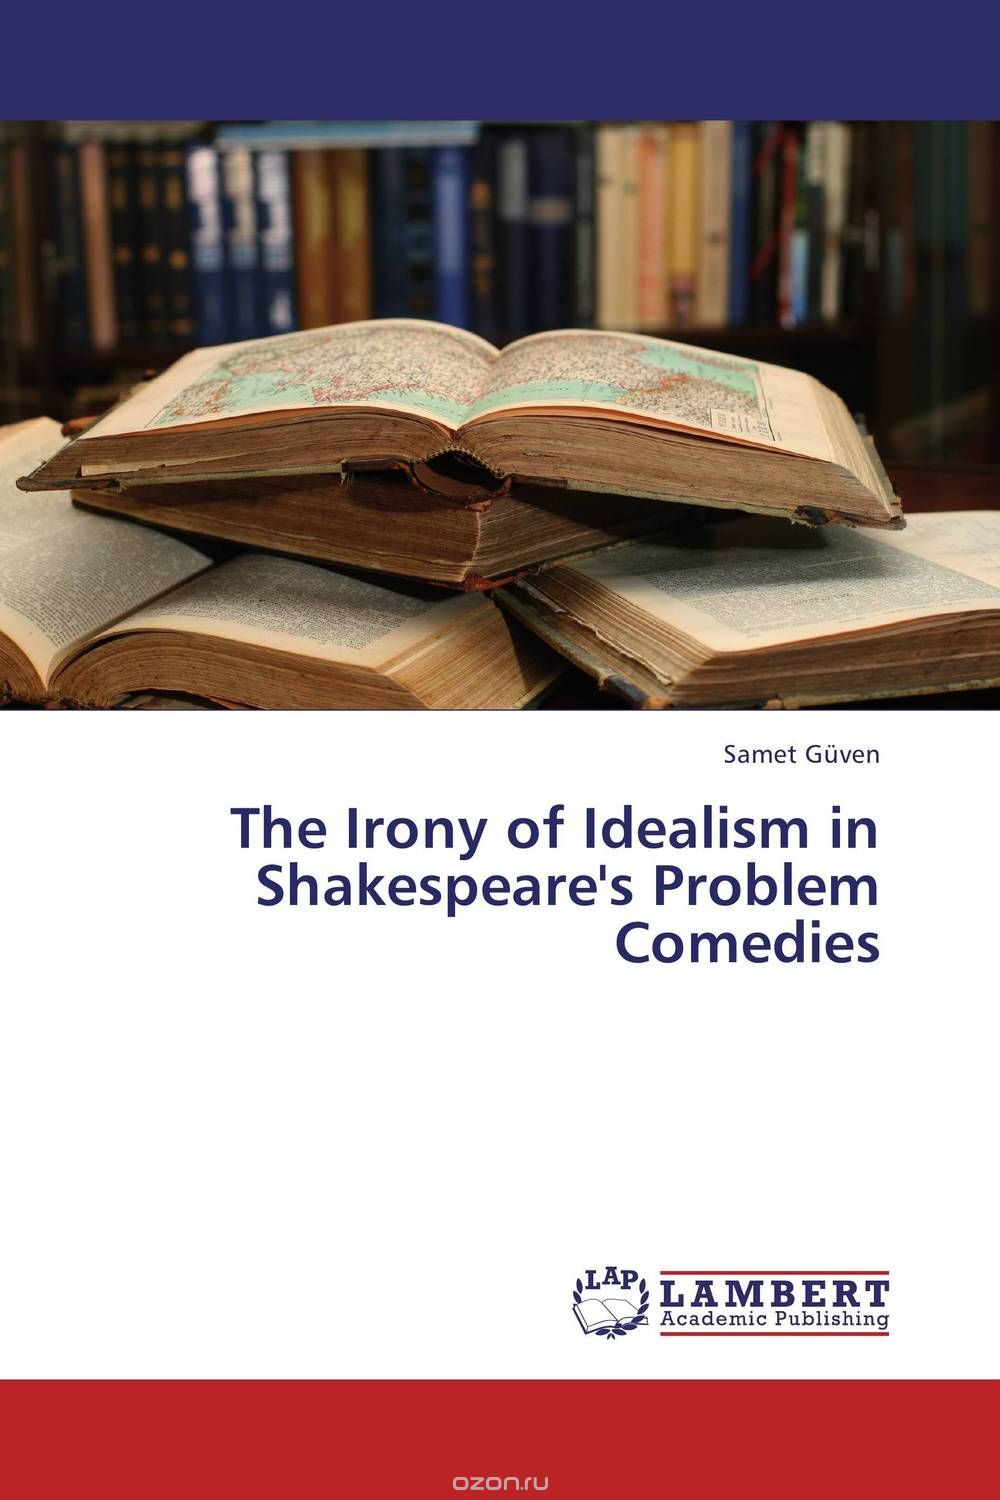 Скачать книгу "The Irony of Idealism in Shakespeare's Problem Comedies"